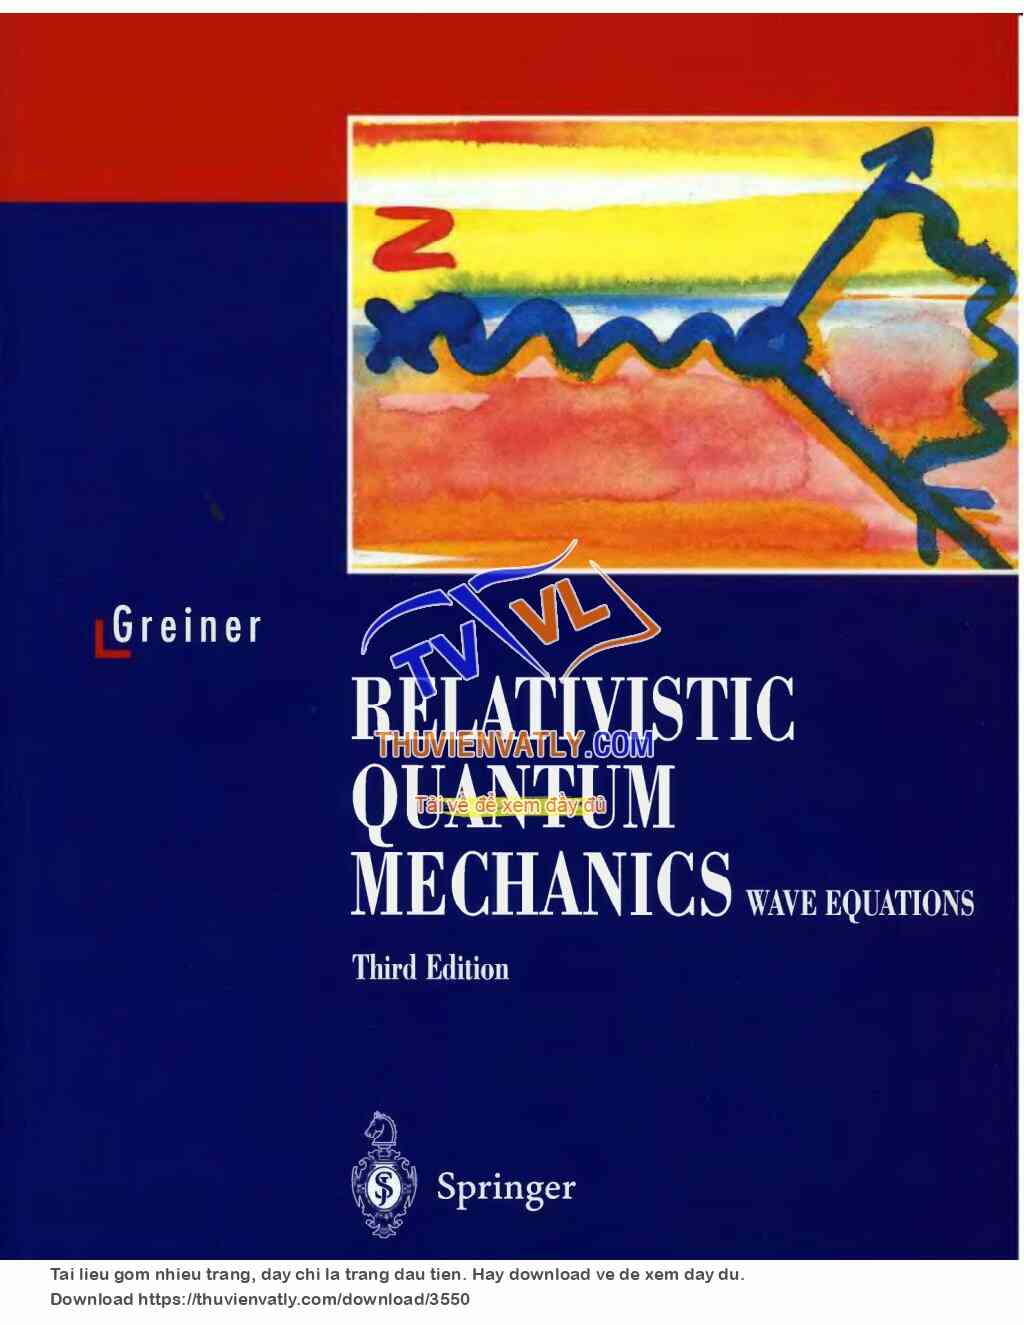 Greiner - Relativistic Quantum Mechanics (Wave Equations).